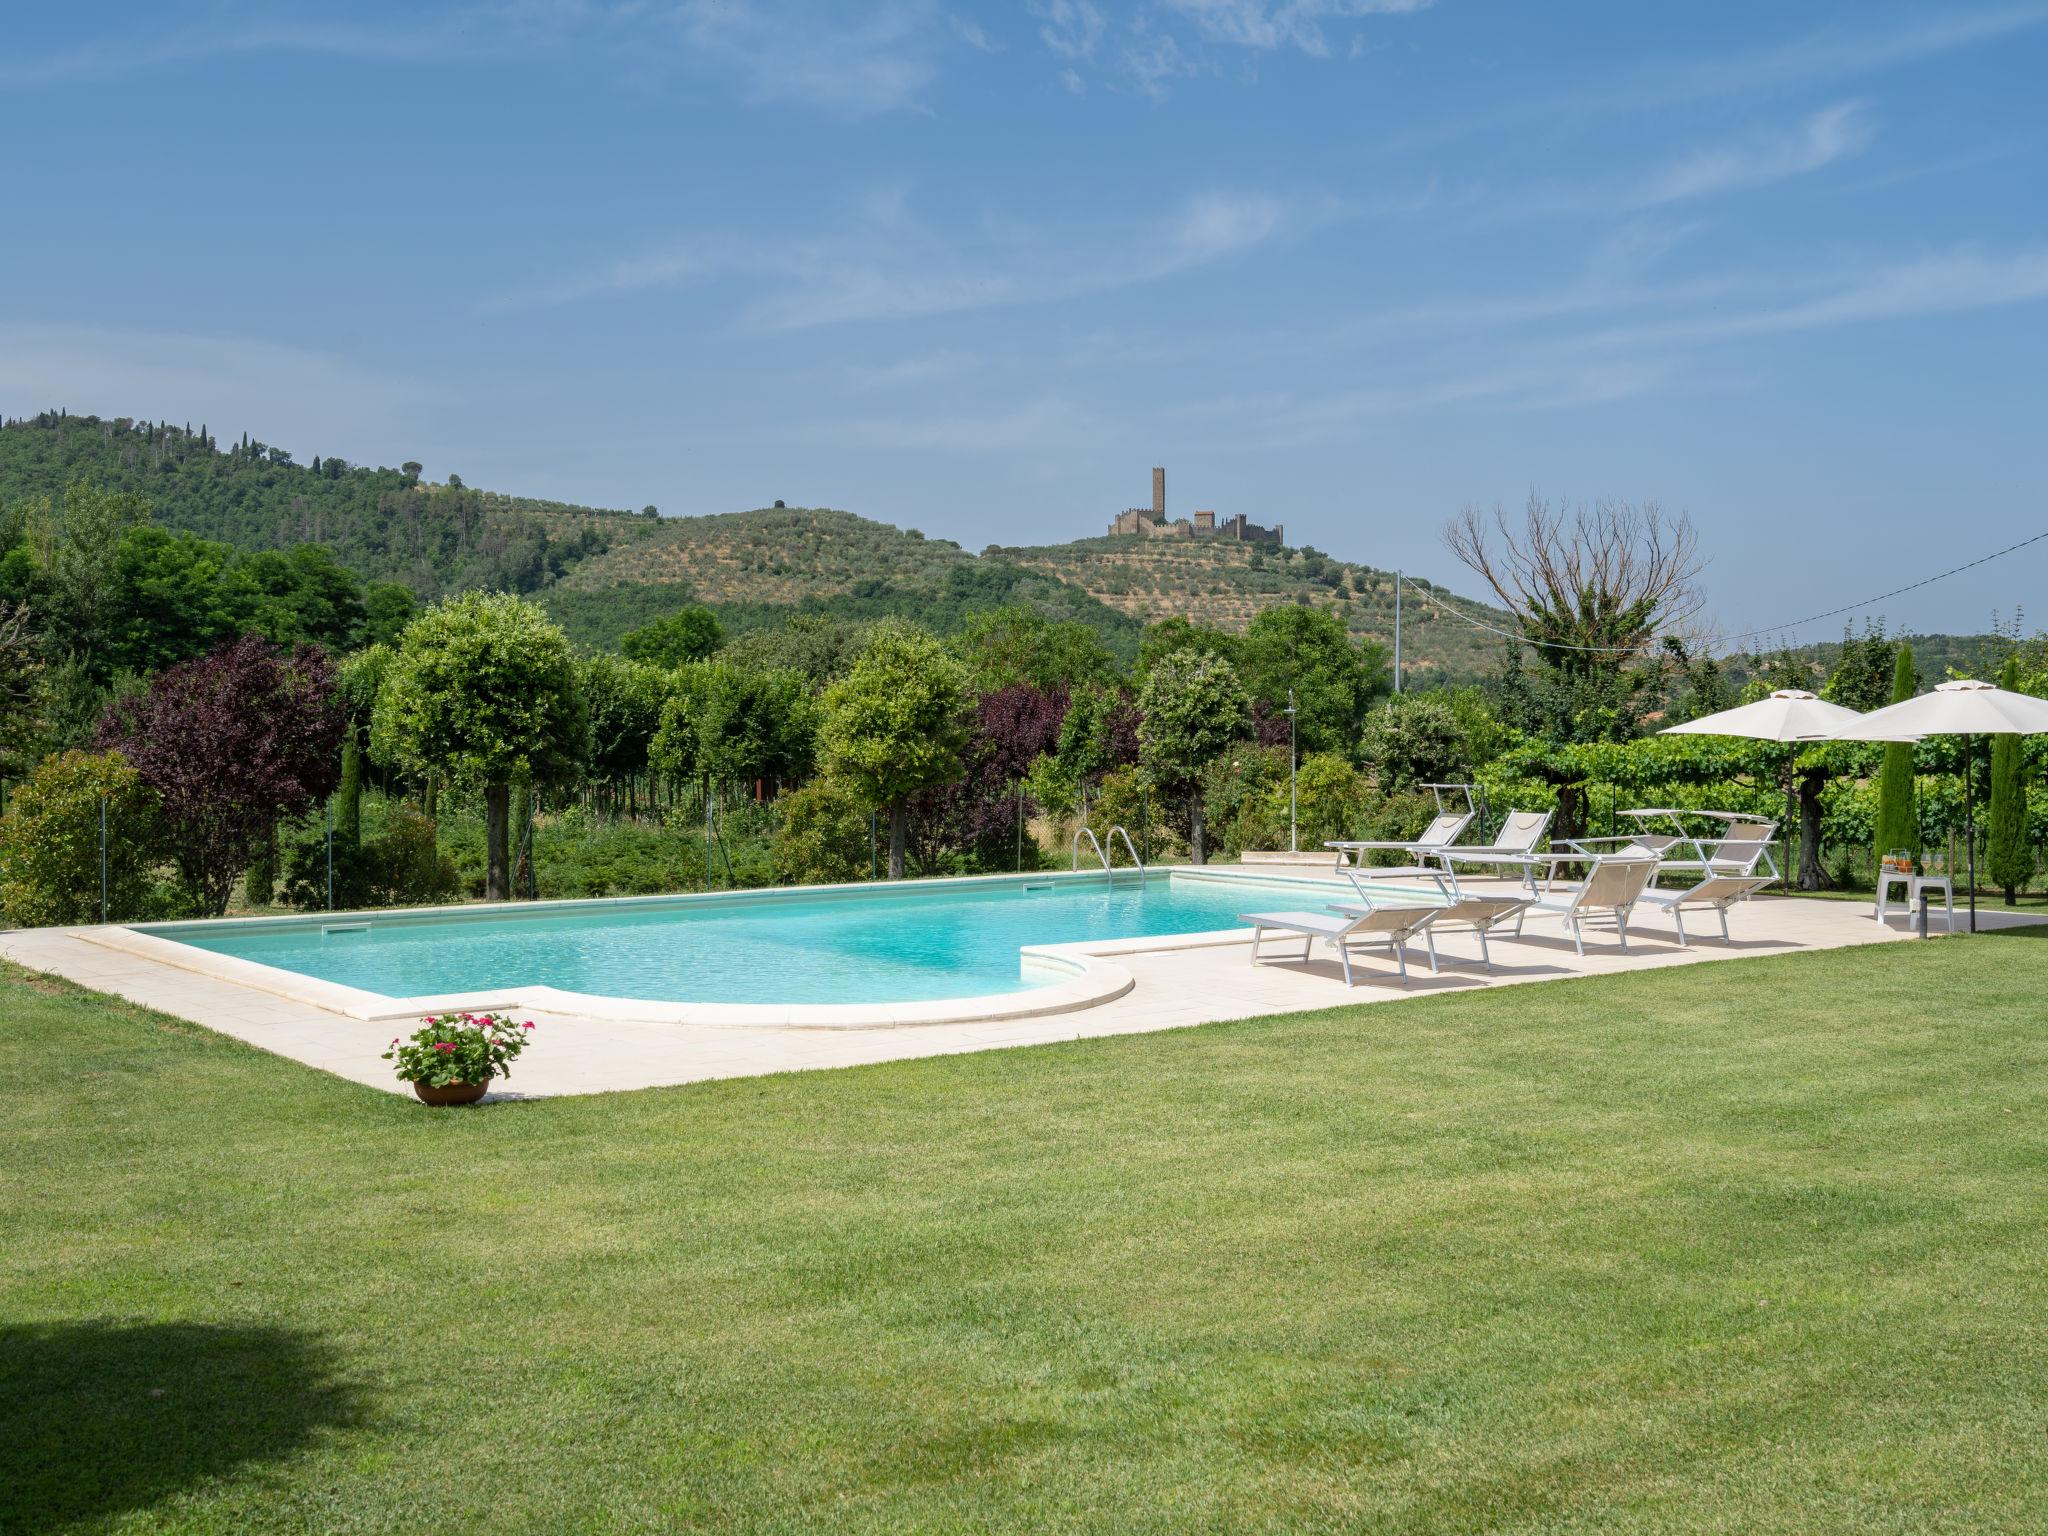 Photo 2 - Maison de 2 chambres à Castiglion Fiorentino avec piscine privée et jardin